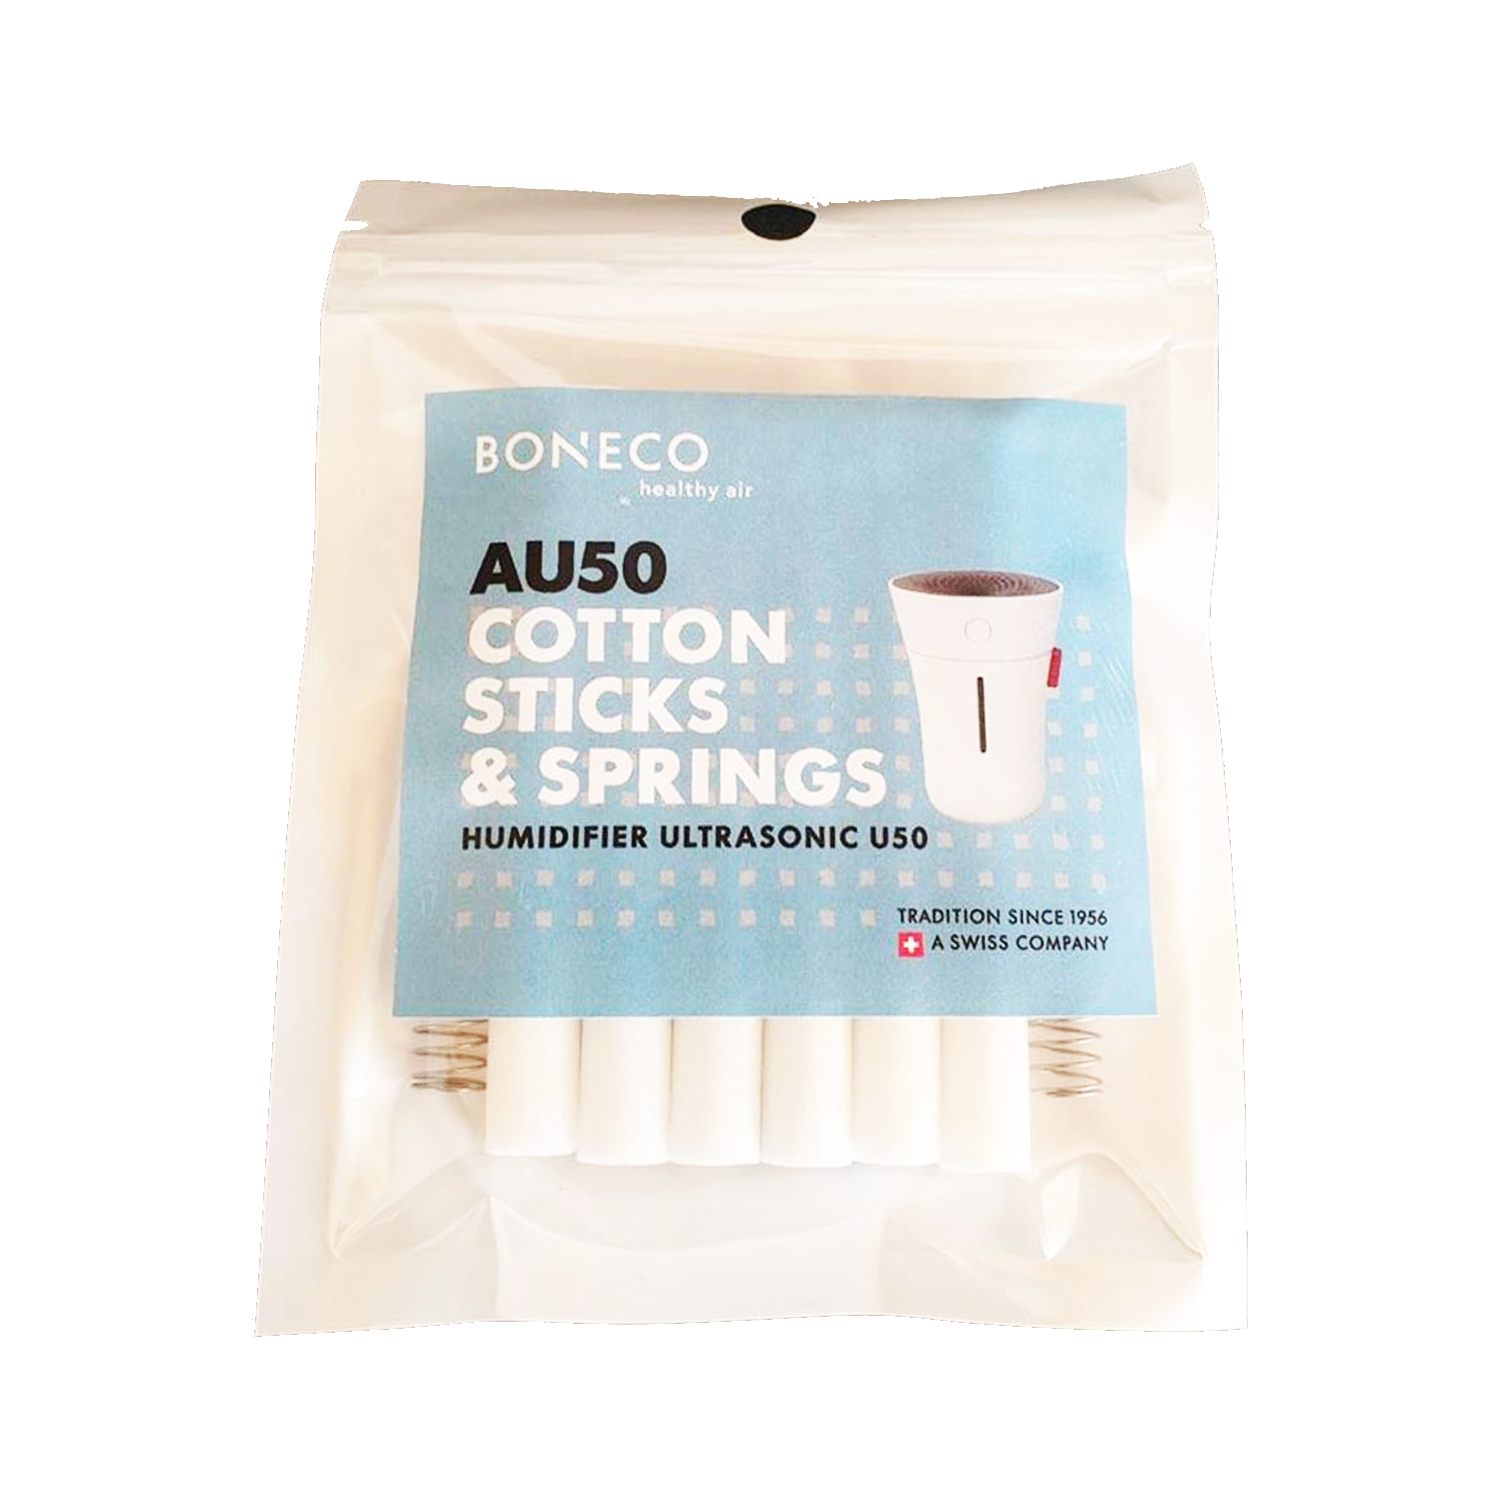 AU50 Cotton Sticks